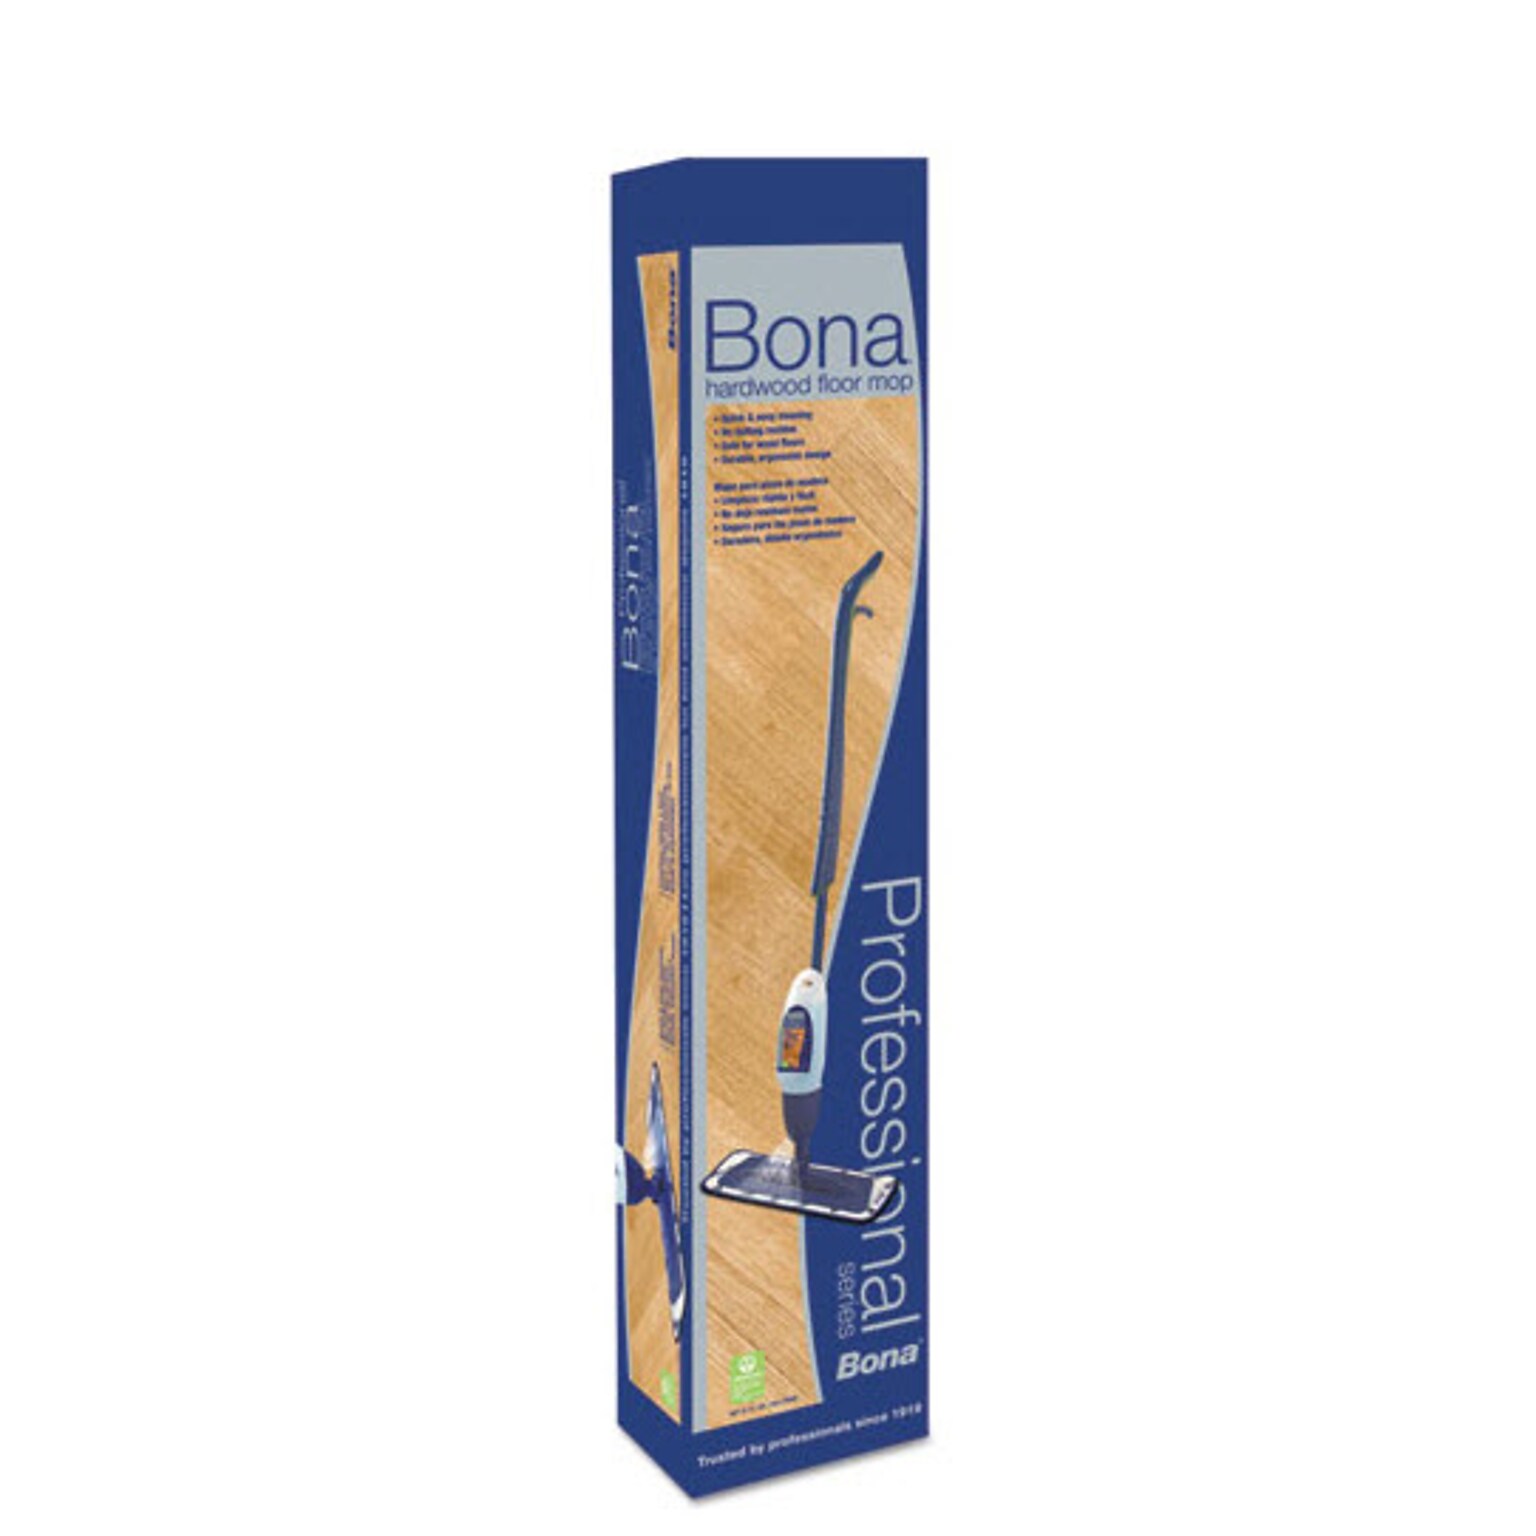 Bona Hardwood Floor Mop, 15 Microfiber Head, 52 Handle, Blue (WM710013408)